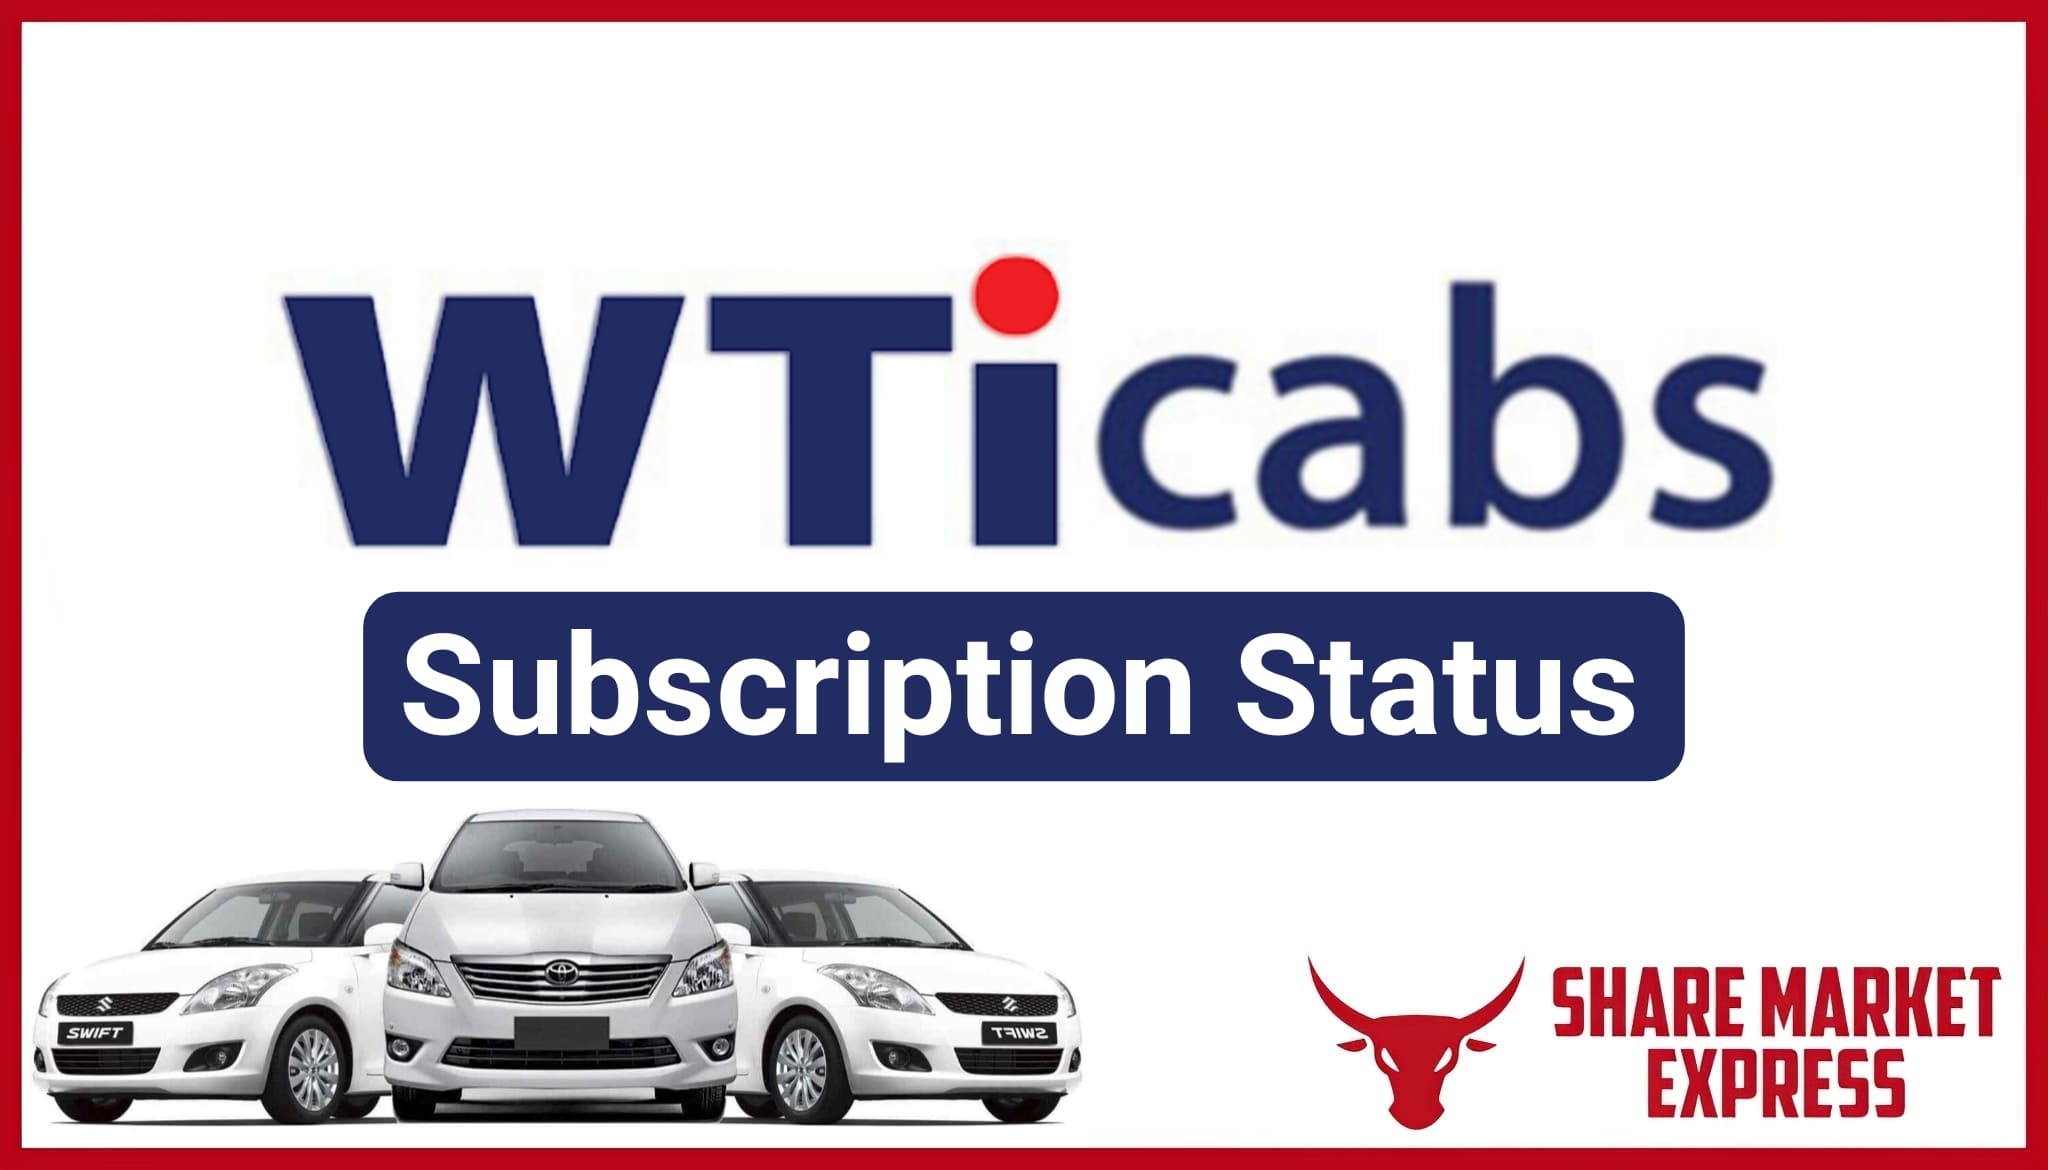 WTI Cabs IPO Subscription Status - Wise Travel India Limited IPO Subscription Status - Wise Travel IPO Subscription Status (Live Data)